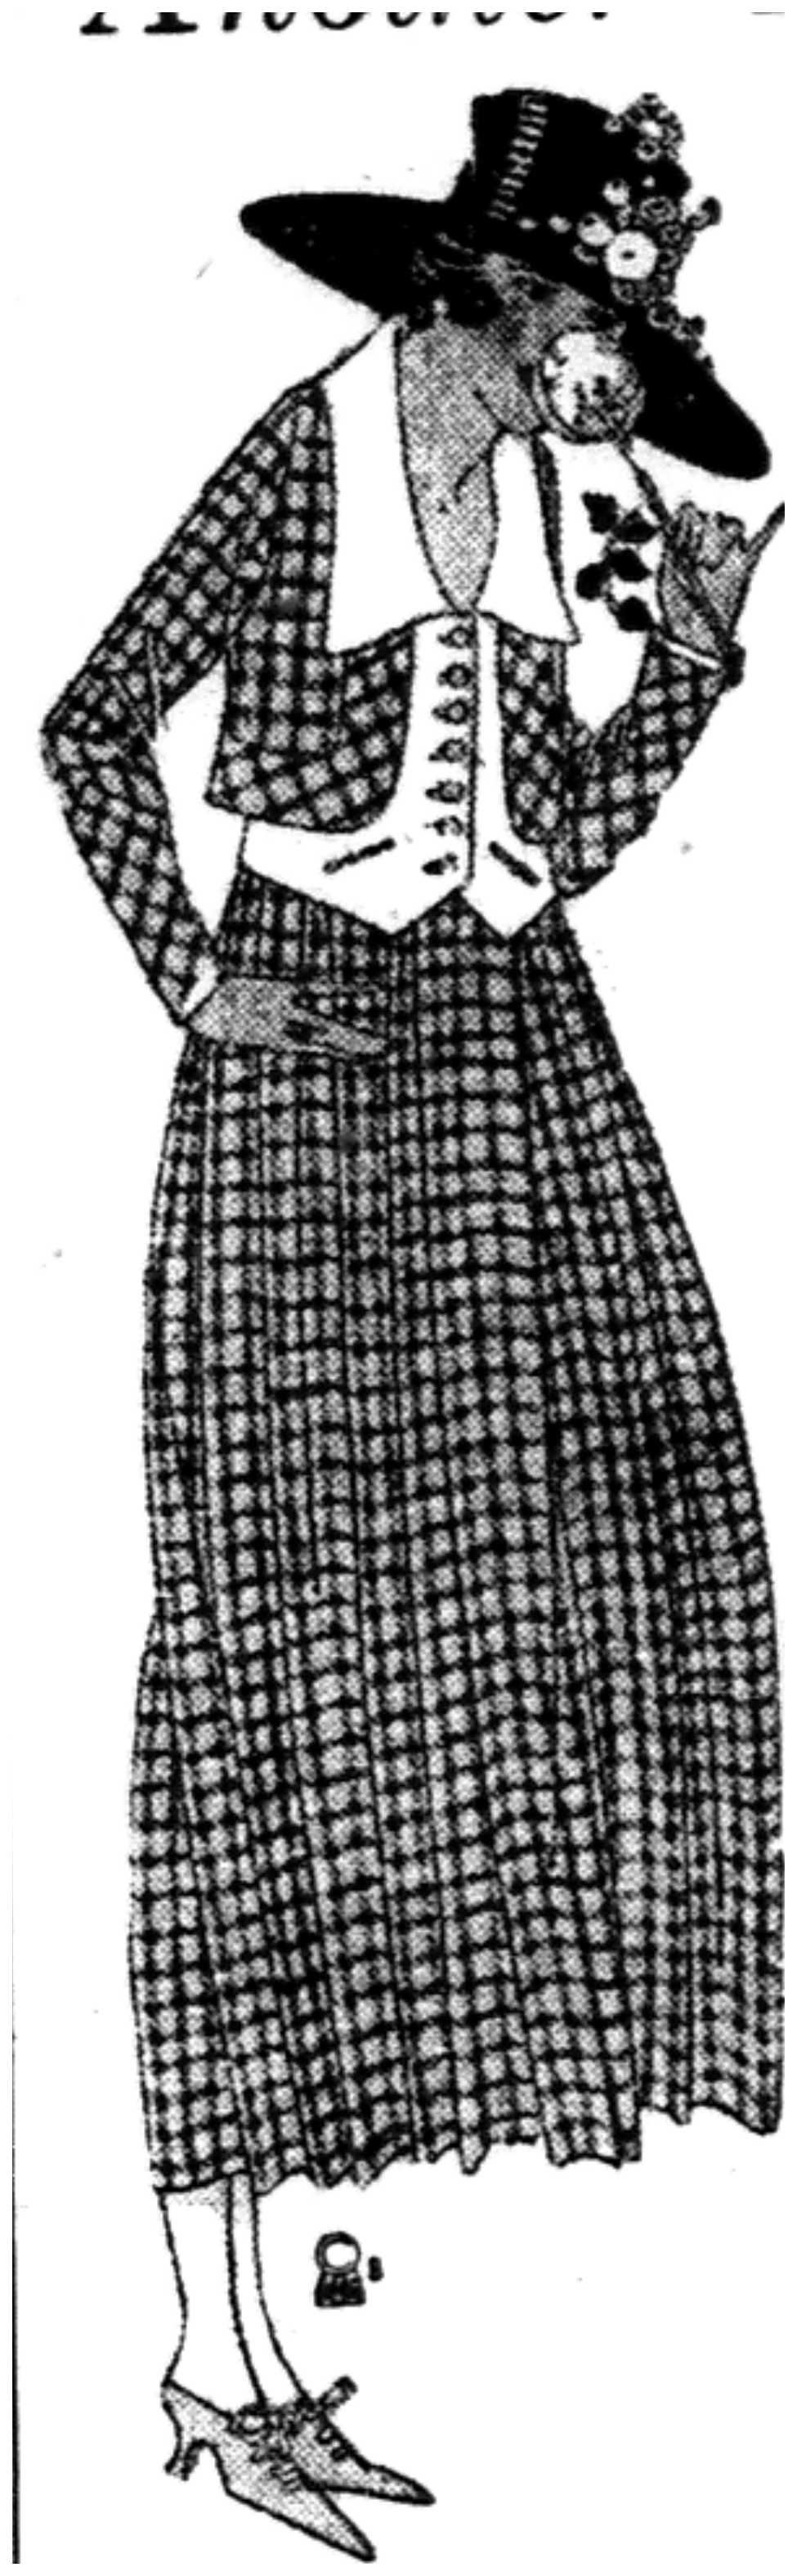 1918 dress-style